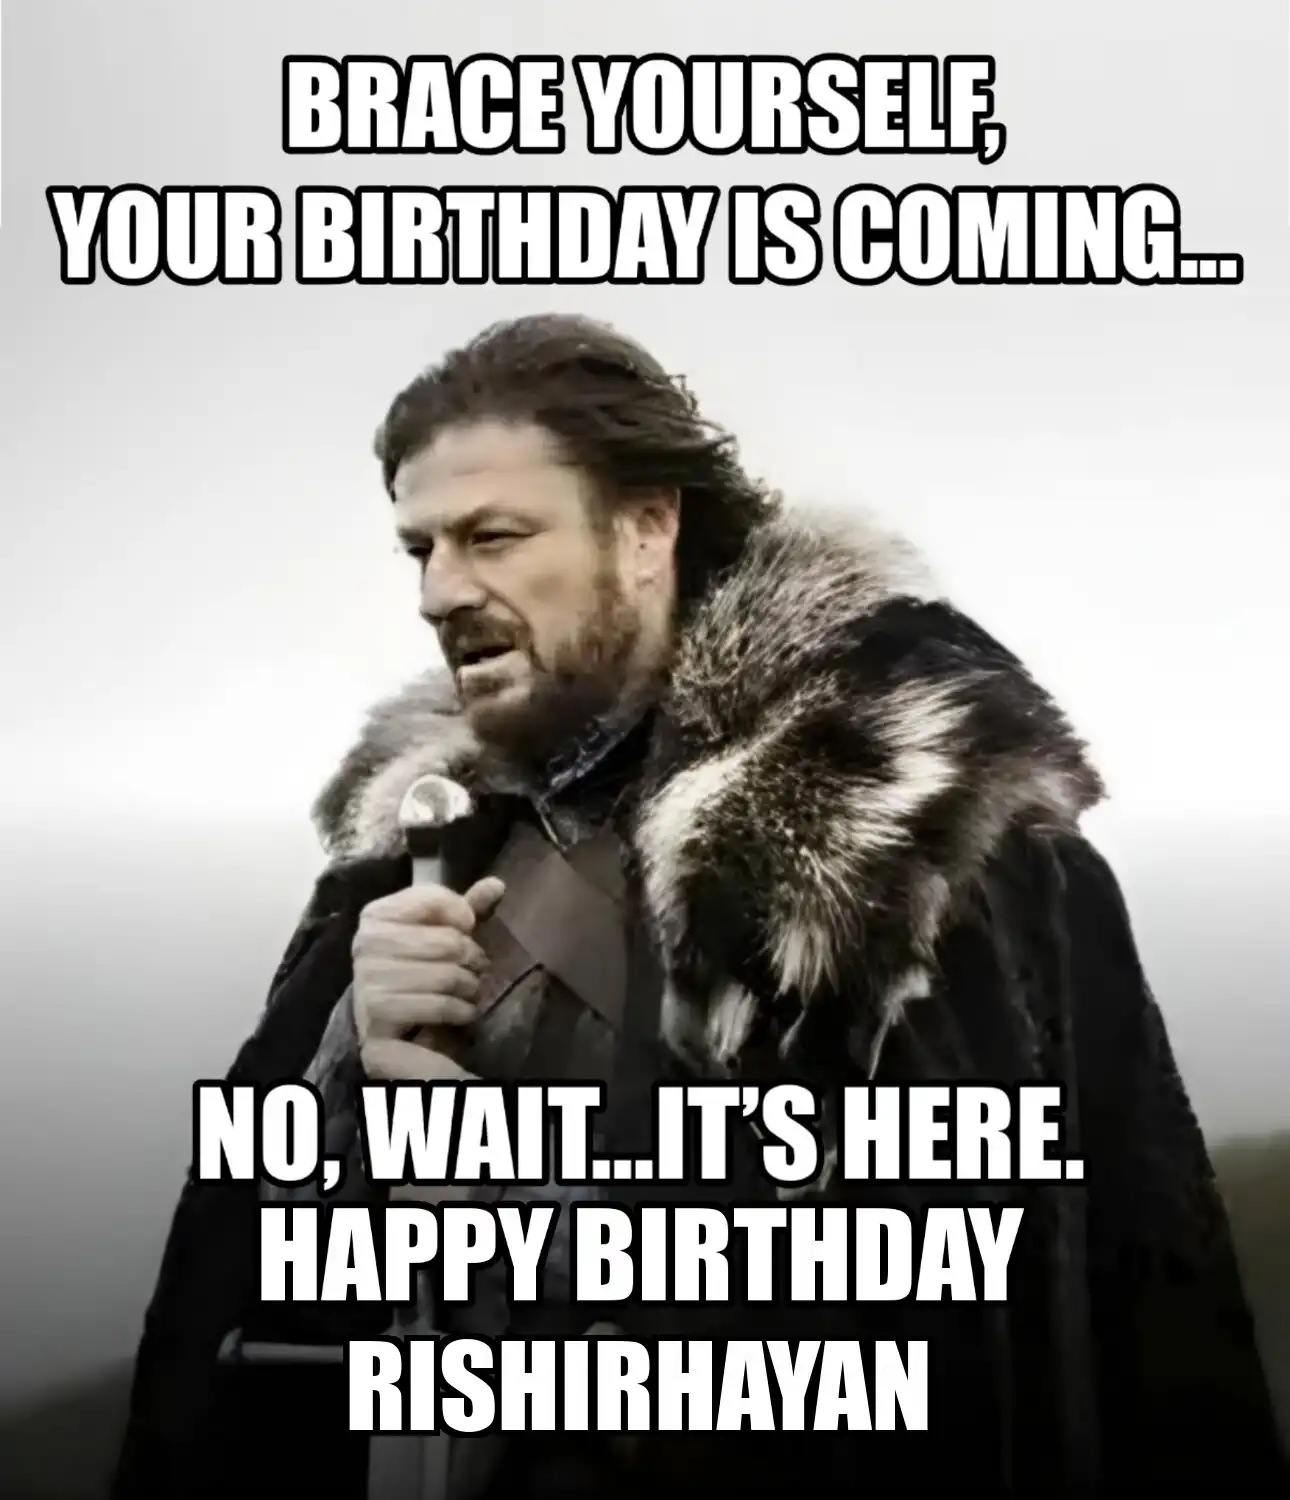 Happy Birthday Rishirhayan Brace Yourself Your Birthday Is Coming Meme